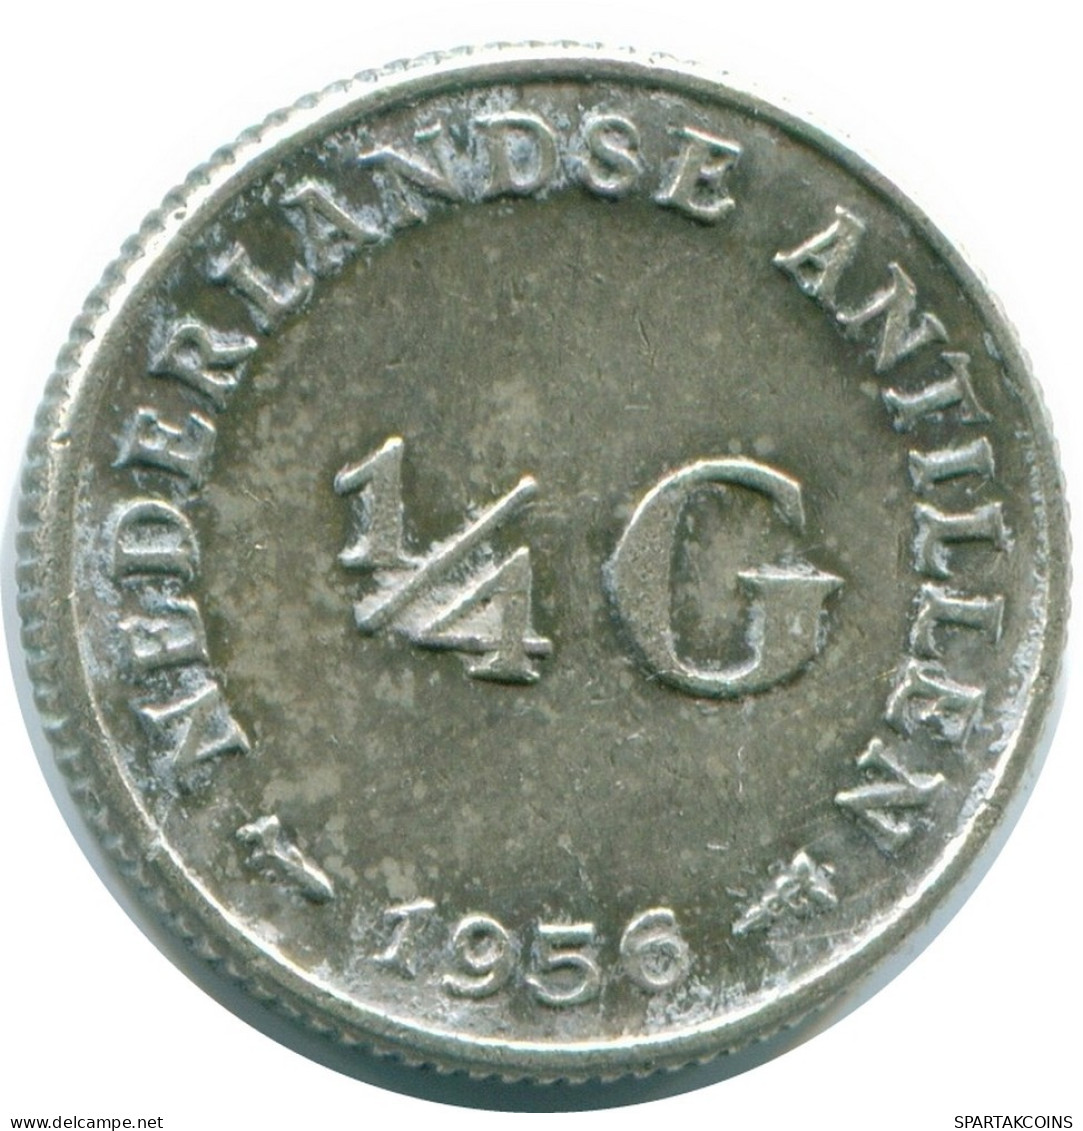 1/4 GULDEN 1956 NETHERLANDS ANTILLES SILVER Colonial Coin #NL10955.4.U.A - Niederländische Antillen